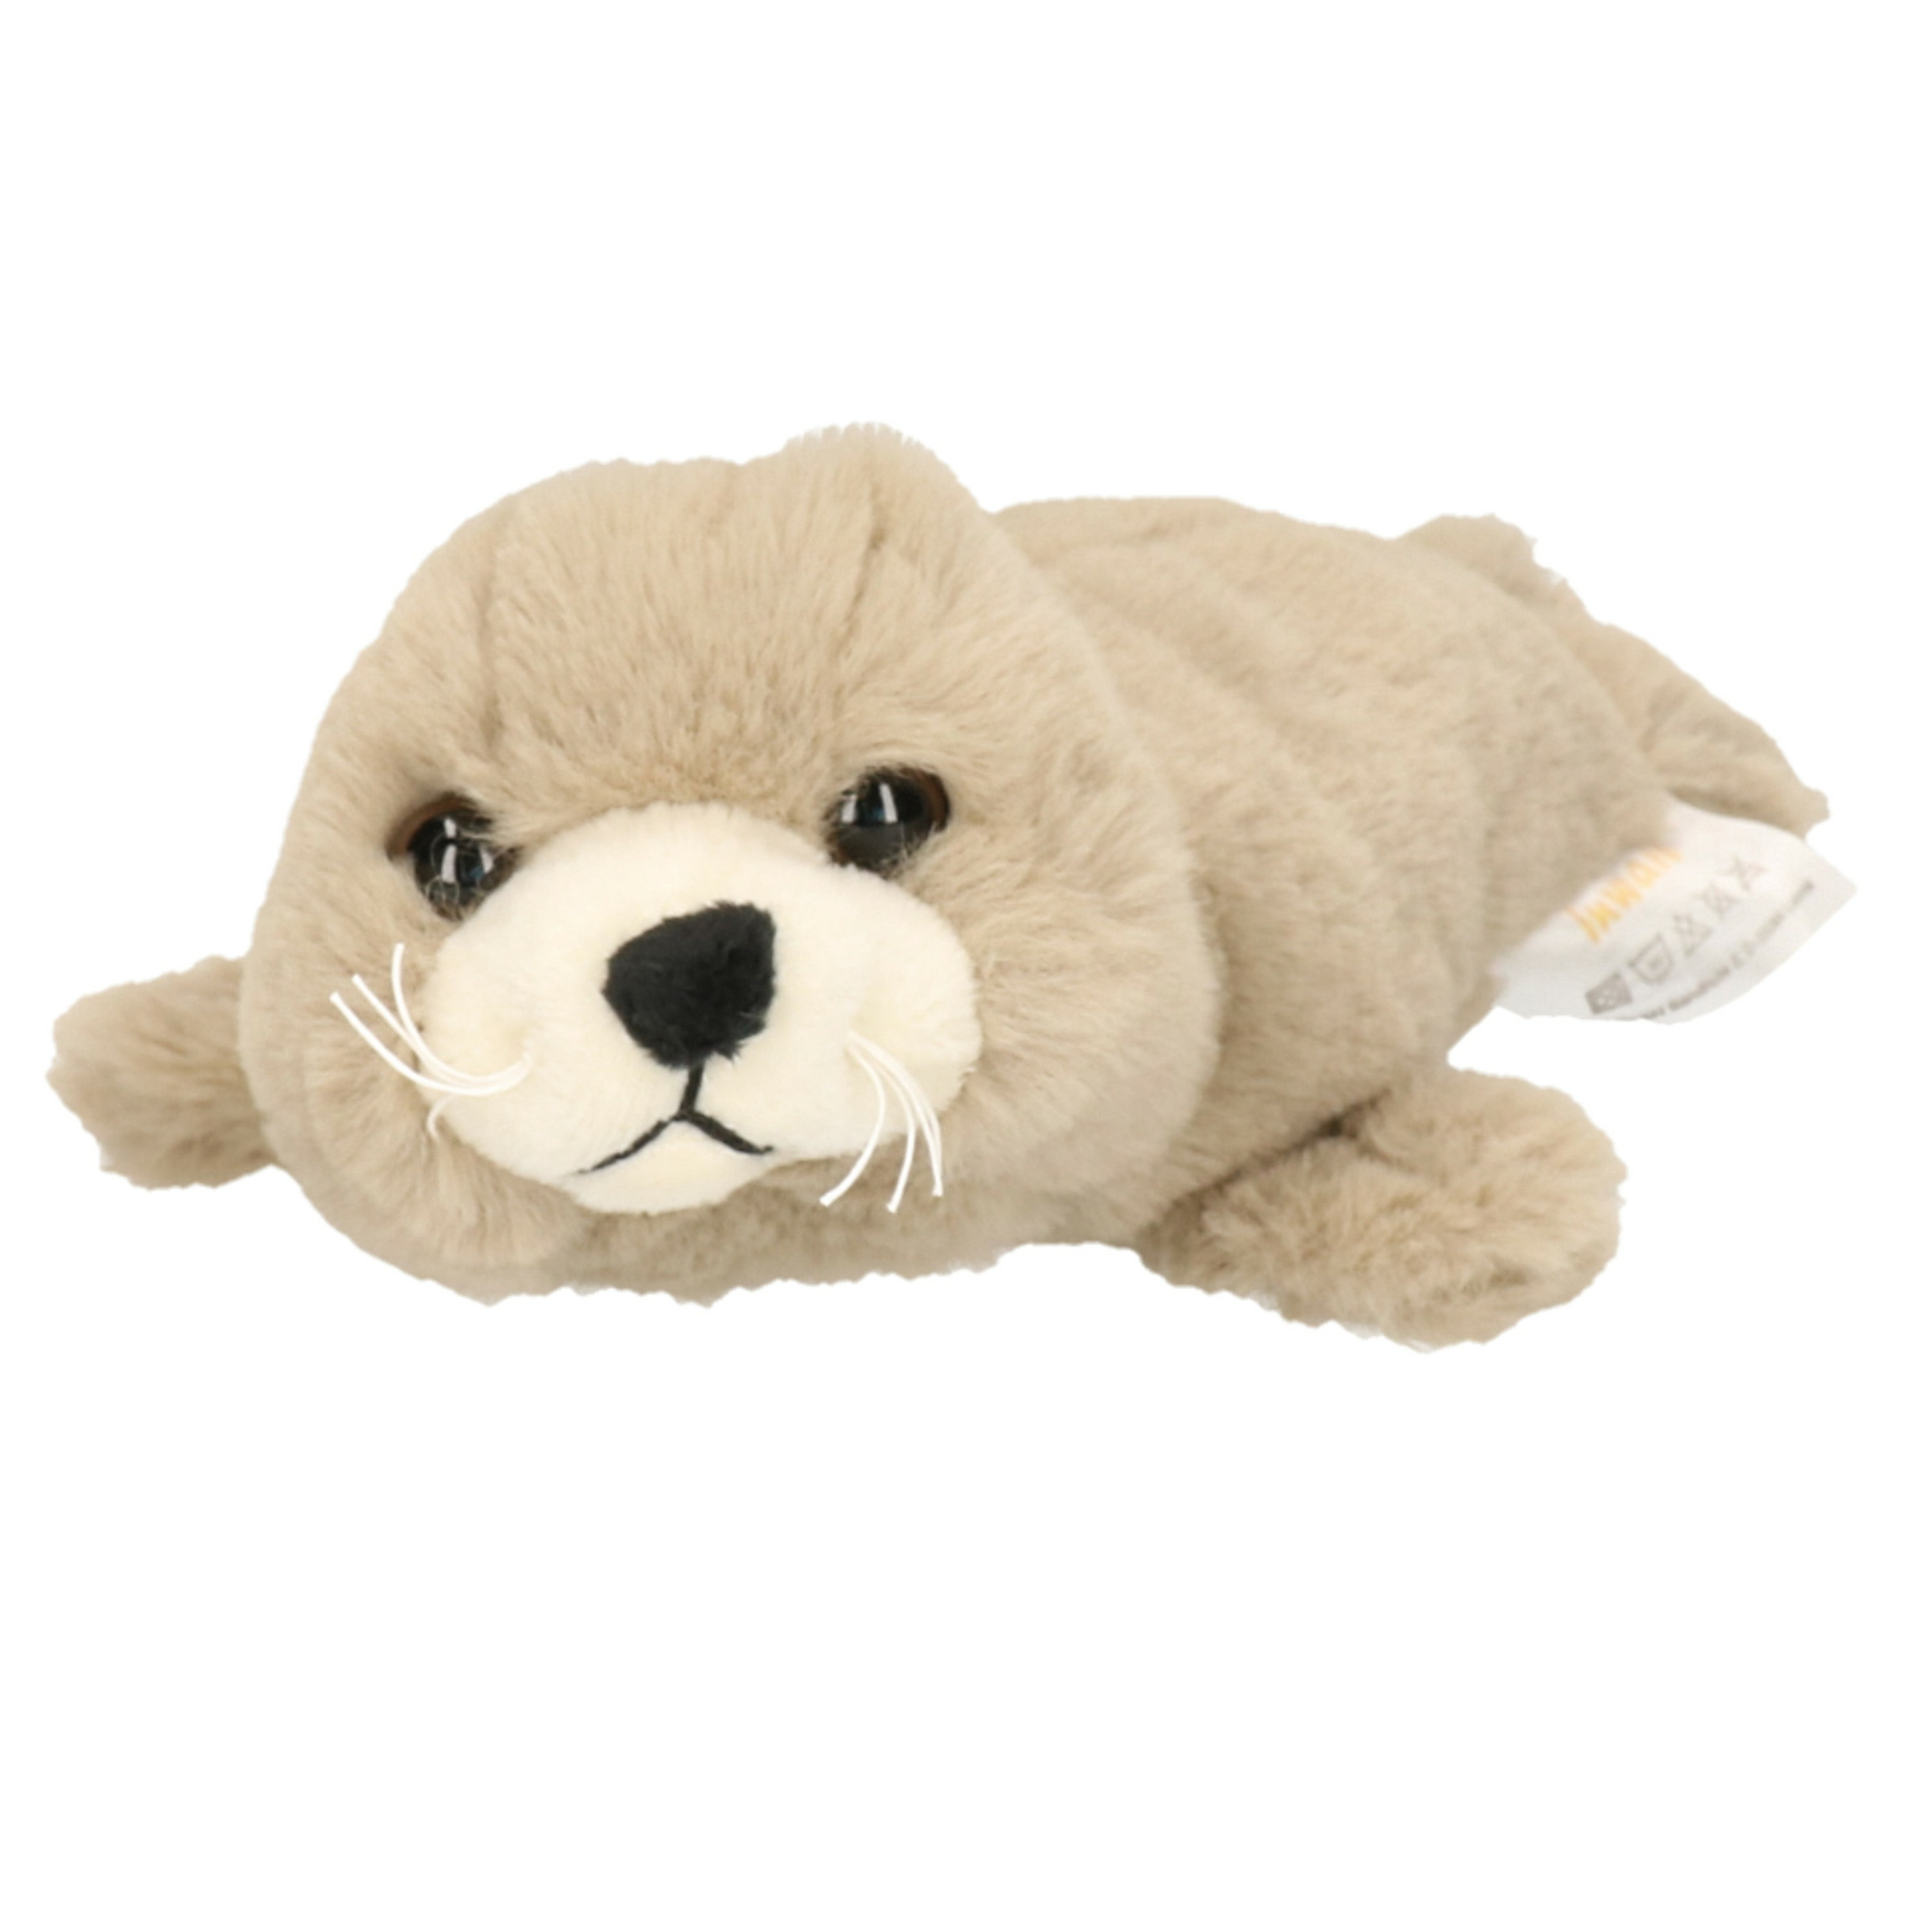 Inware Pluche zeehond knuffel - liggend - beige - polyester - 20 cm -